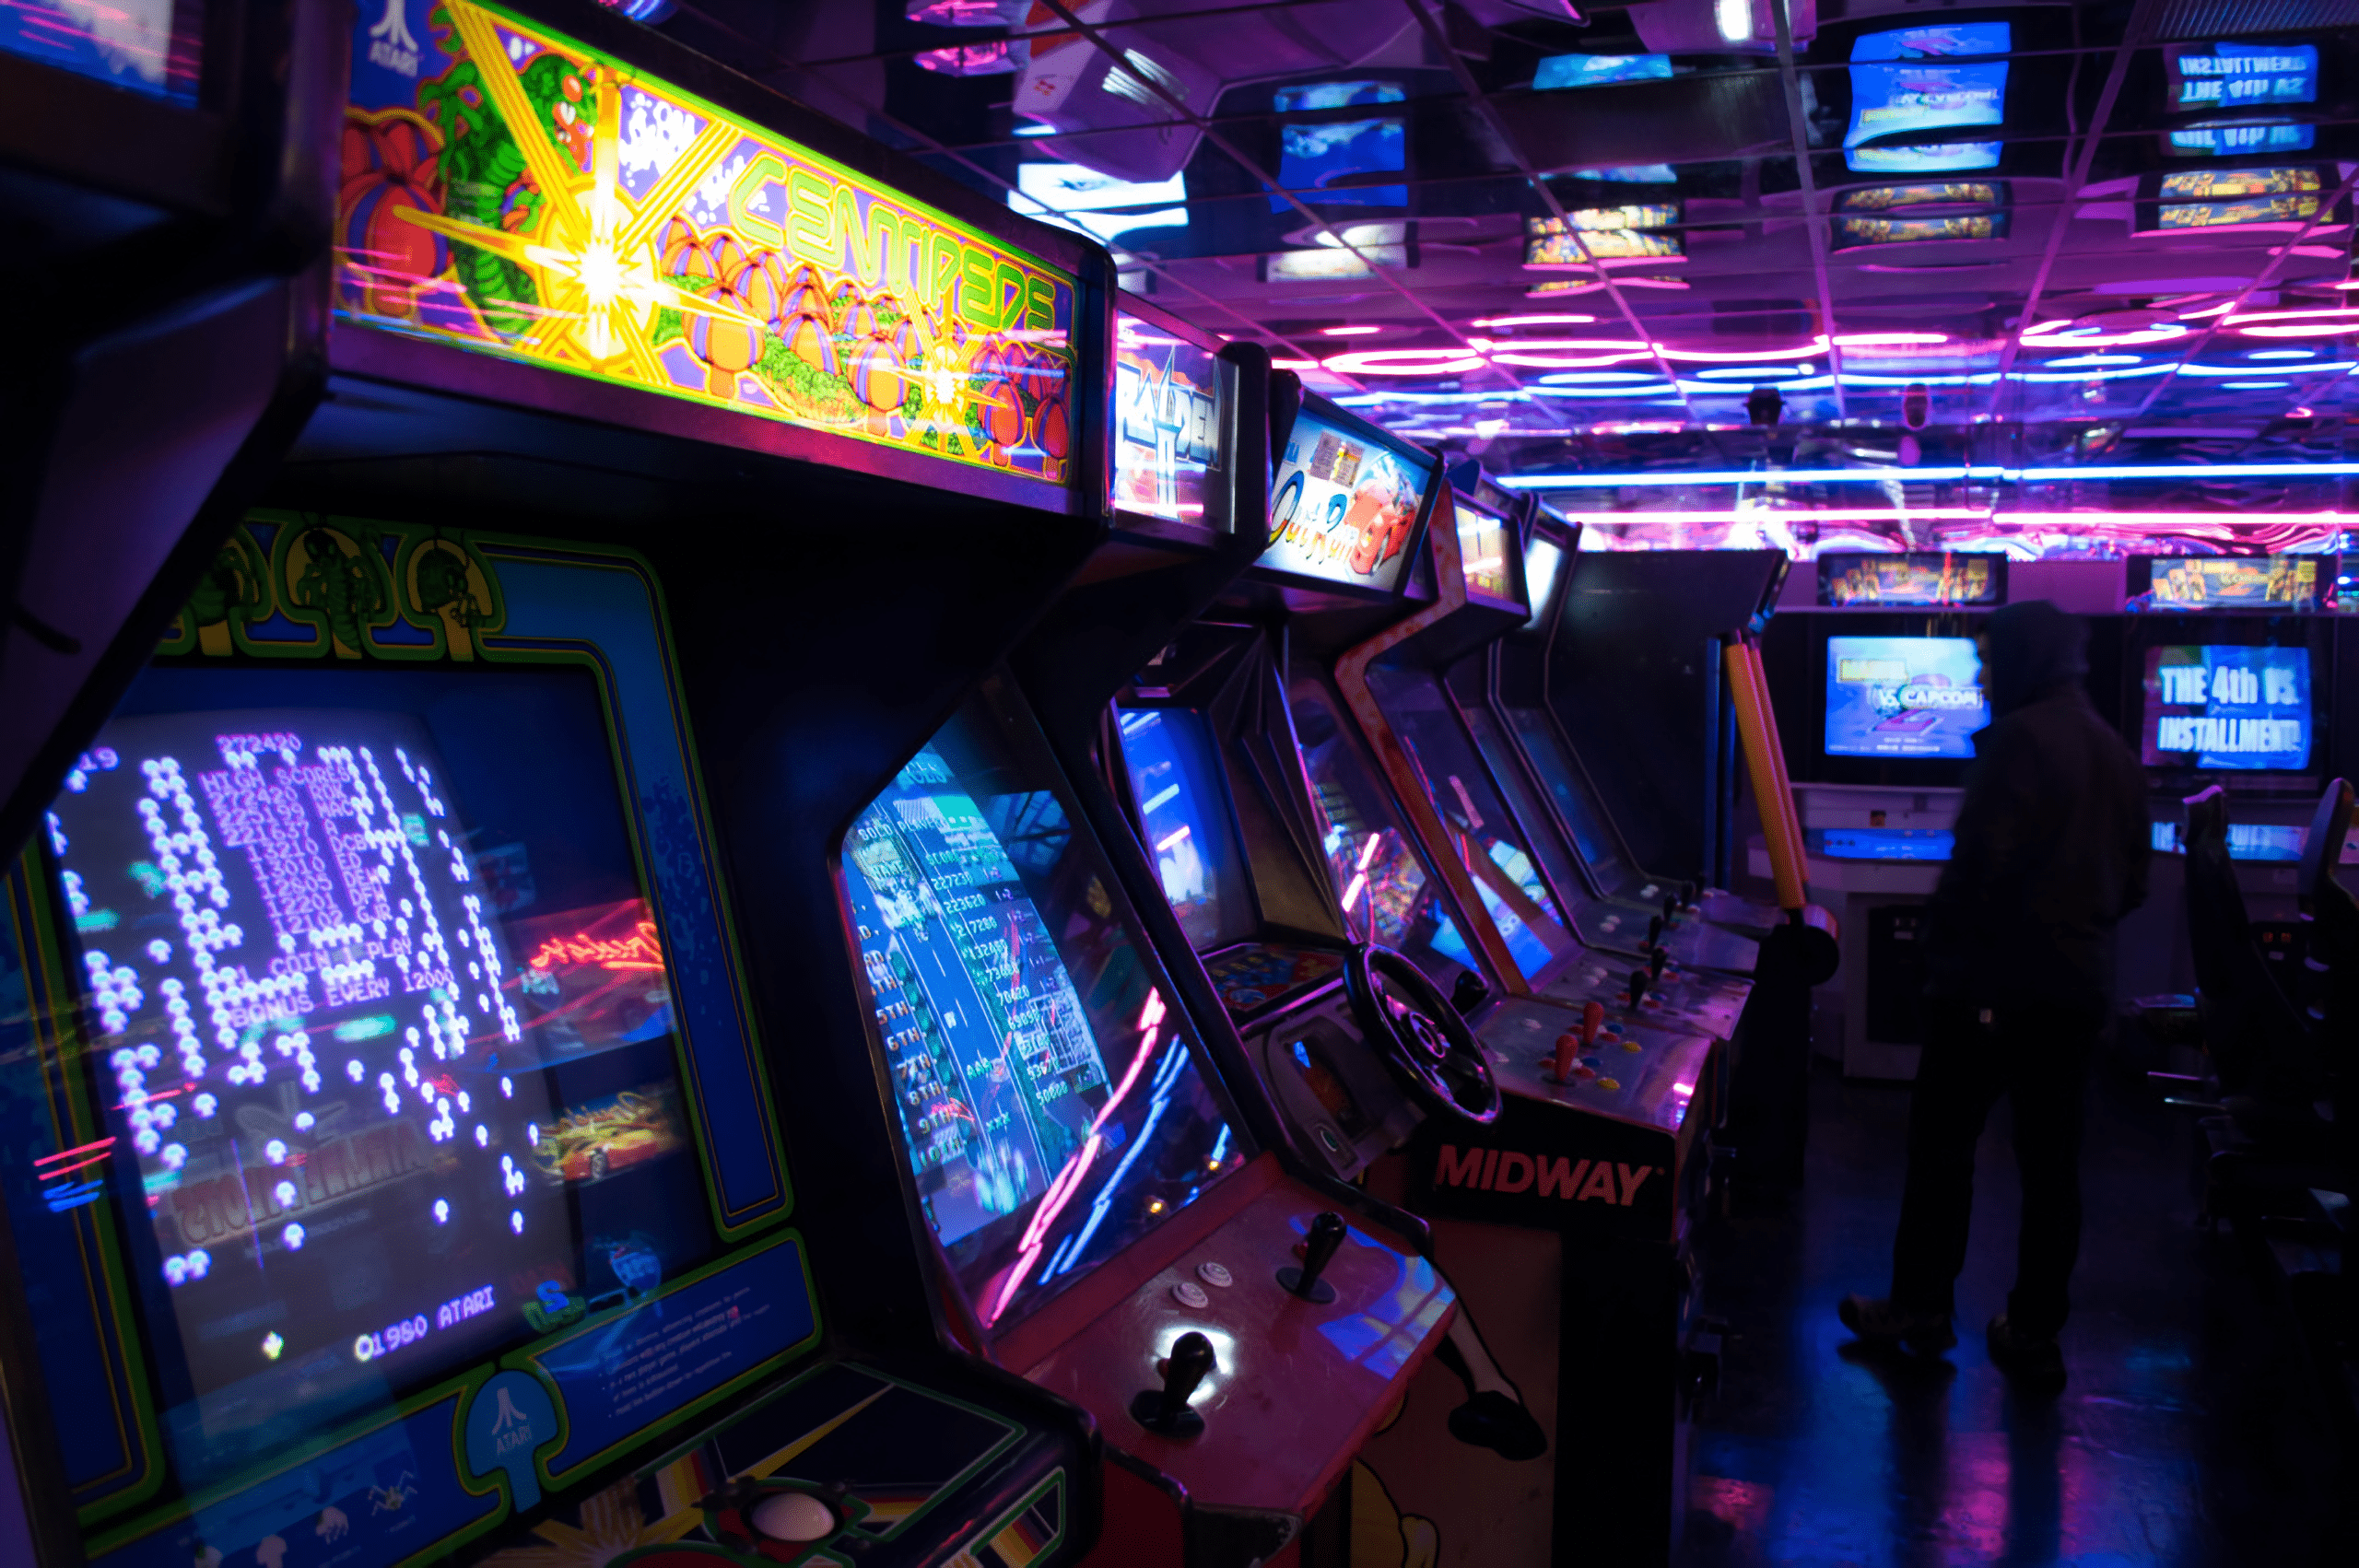 the arcade